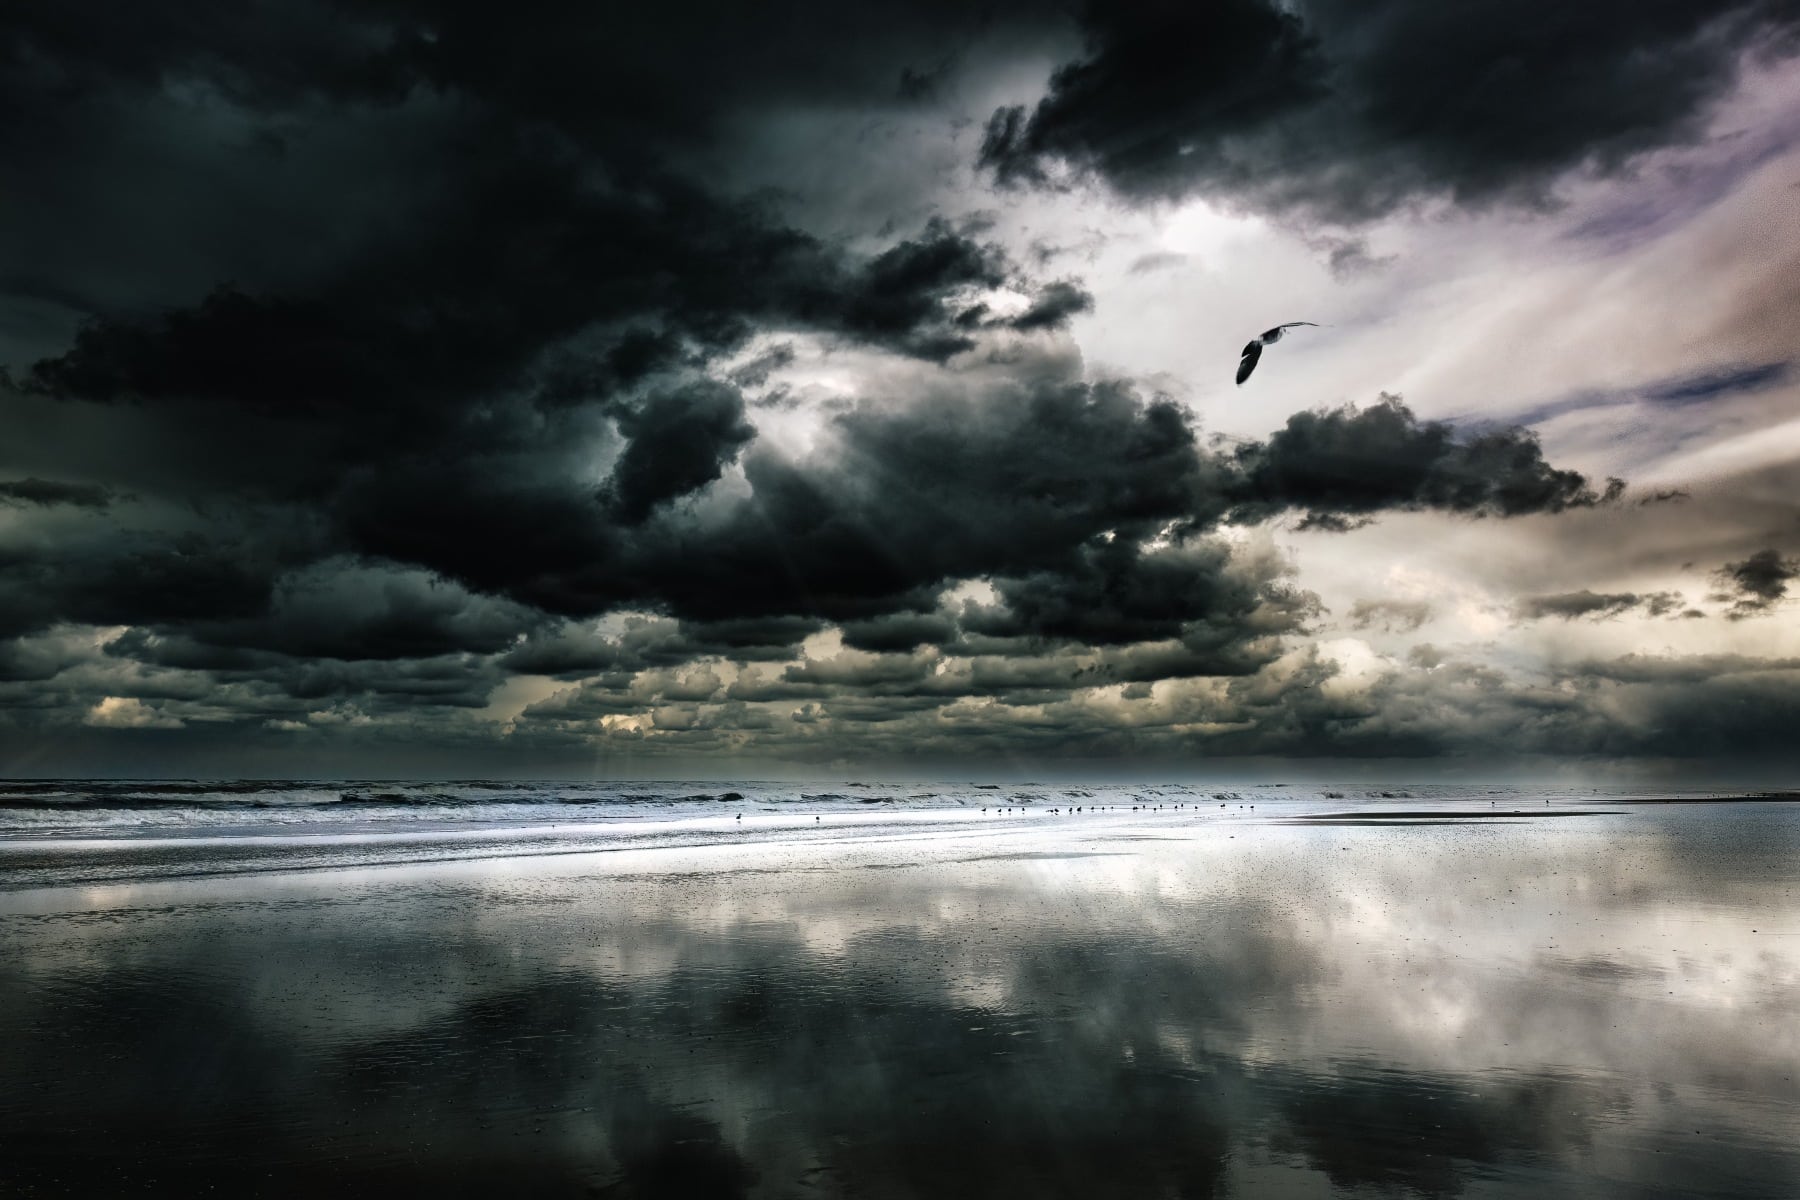 Gerard-Wielenga-Clouds-over-the-beach-10